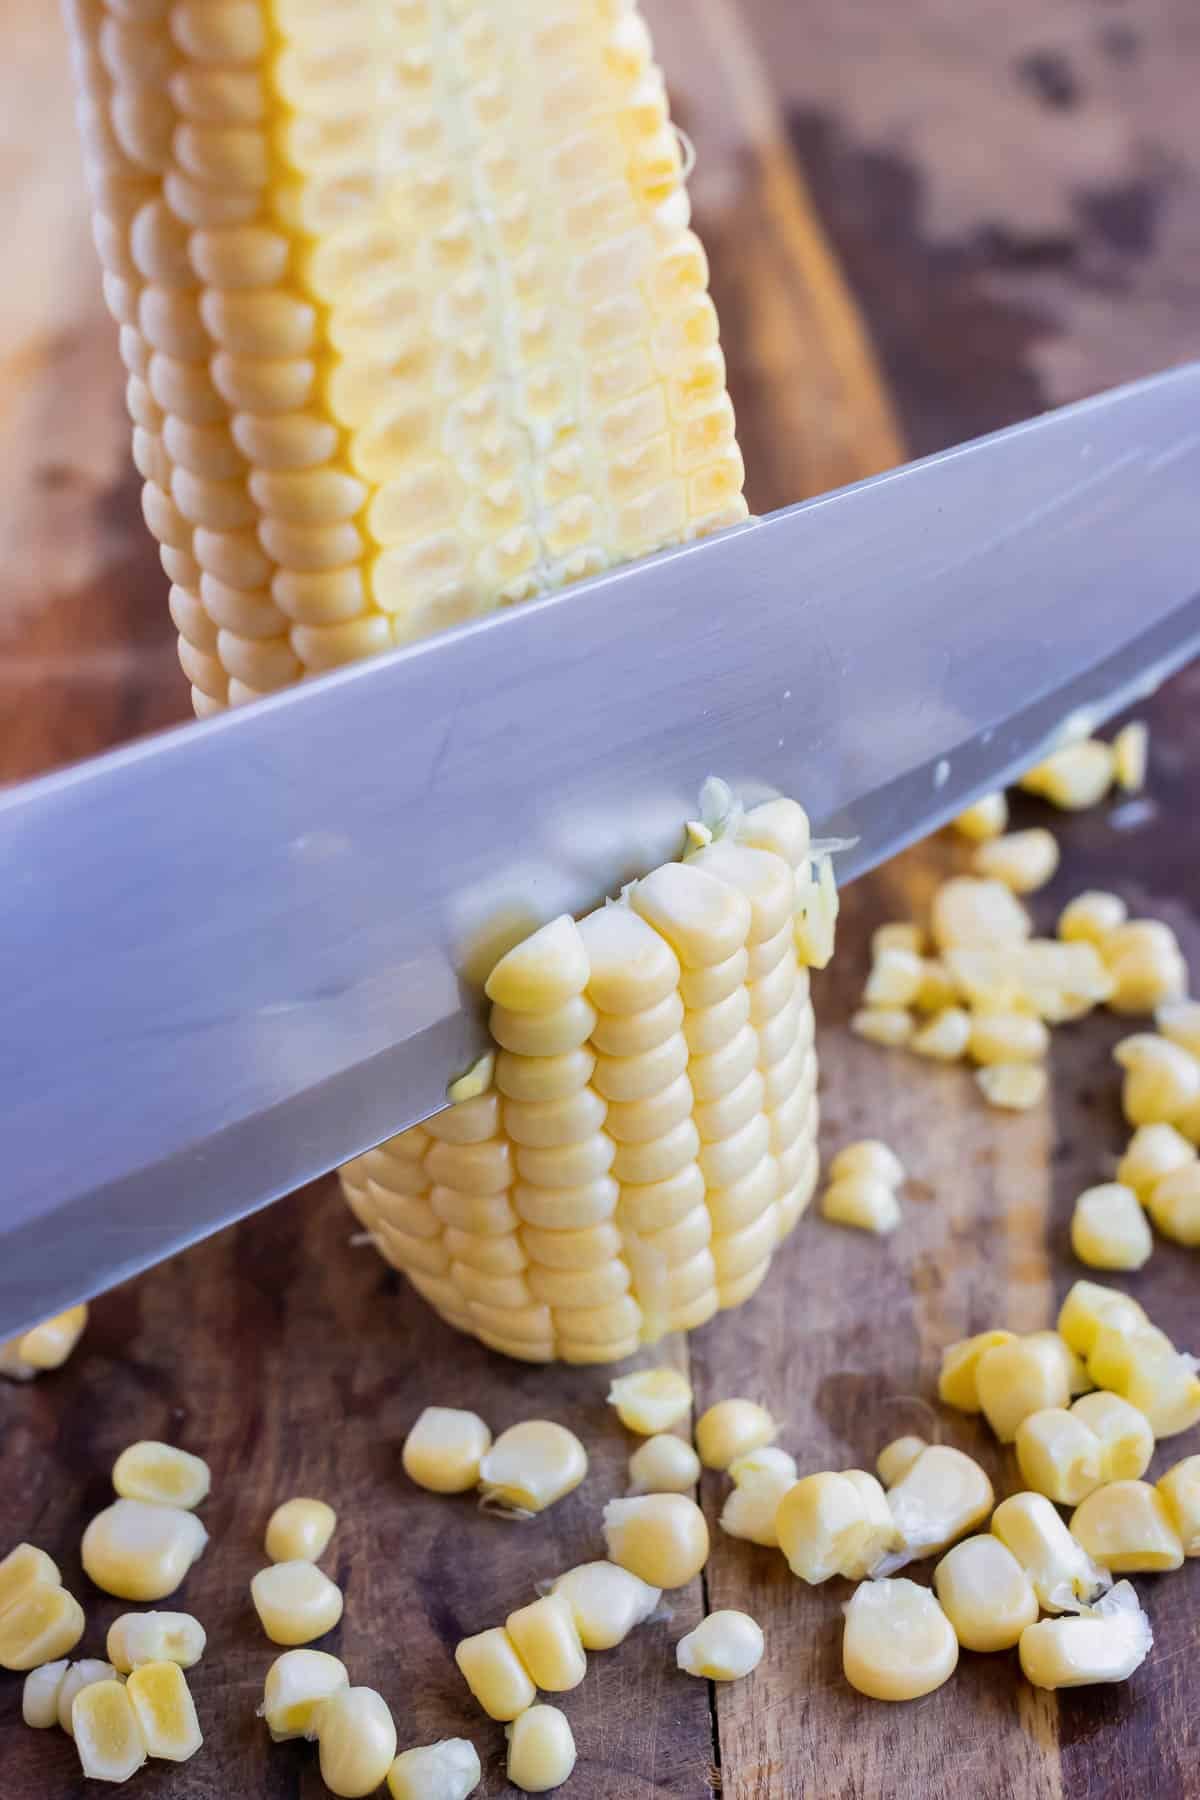 A knife slices corn kernels off the cob.